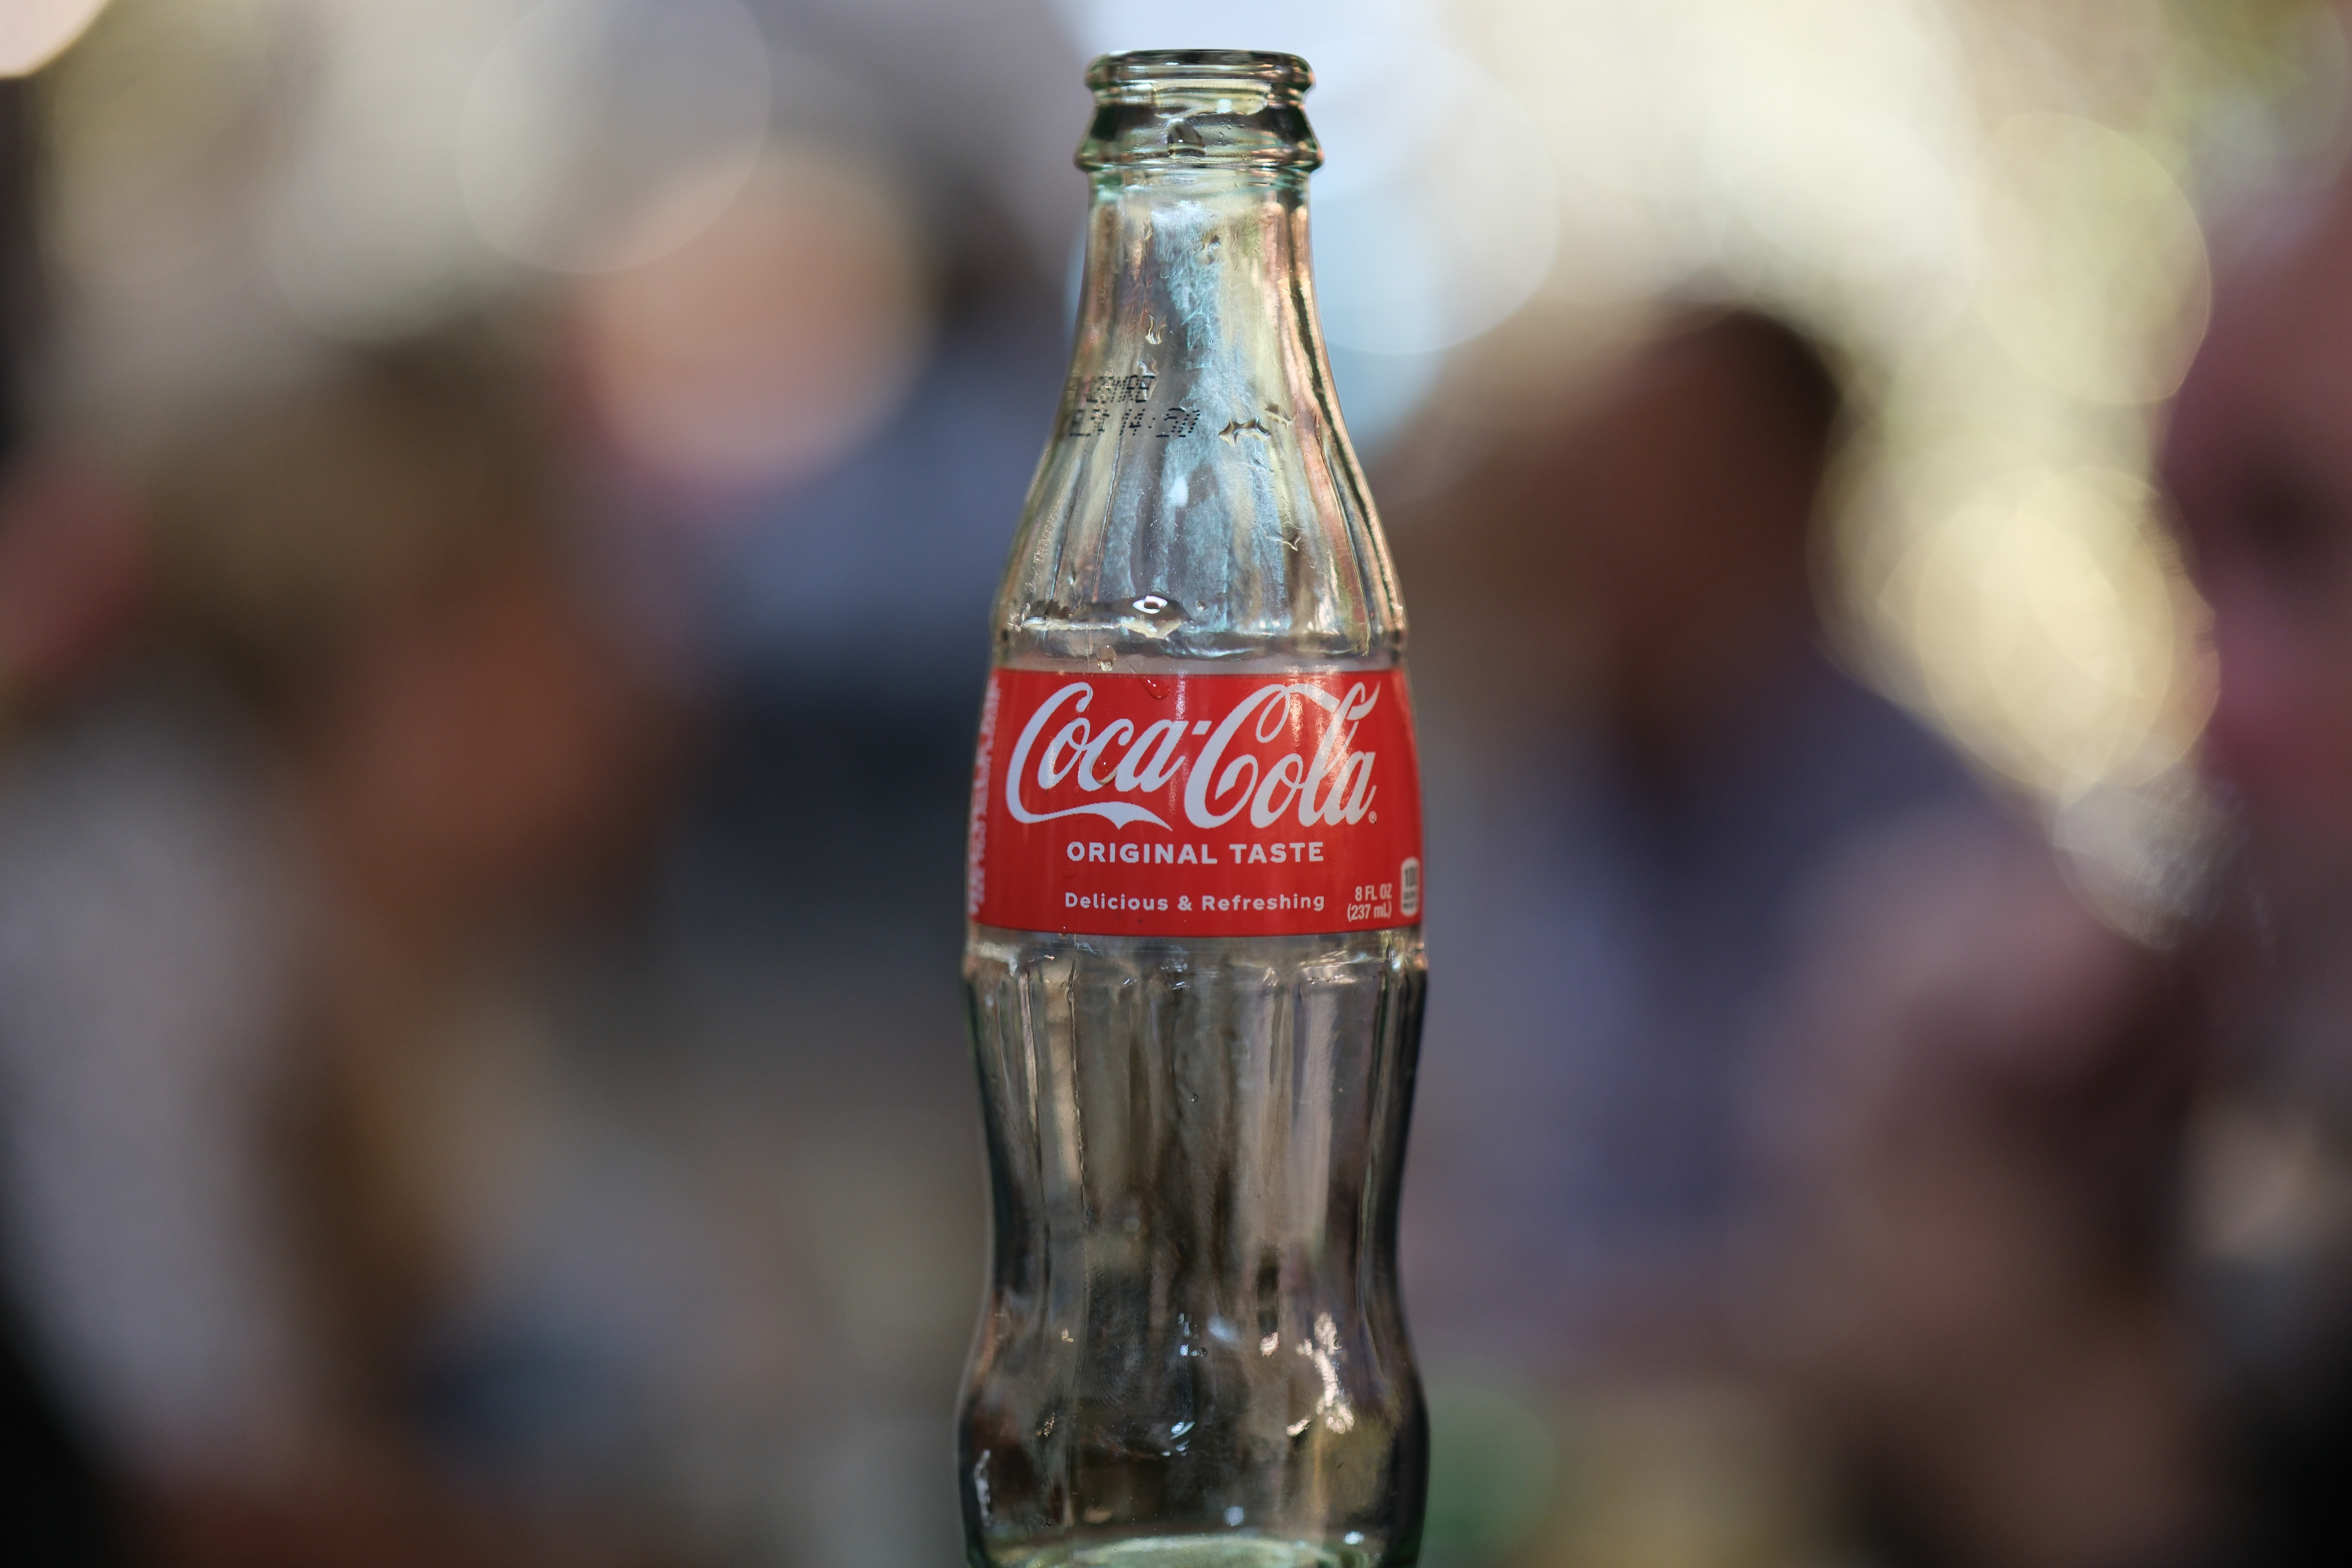 Coca-cola bottle, taken with X-H2, 1/85s, f/1.2, ISO320, 56mm, Joshua Waller